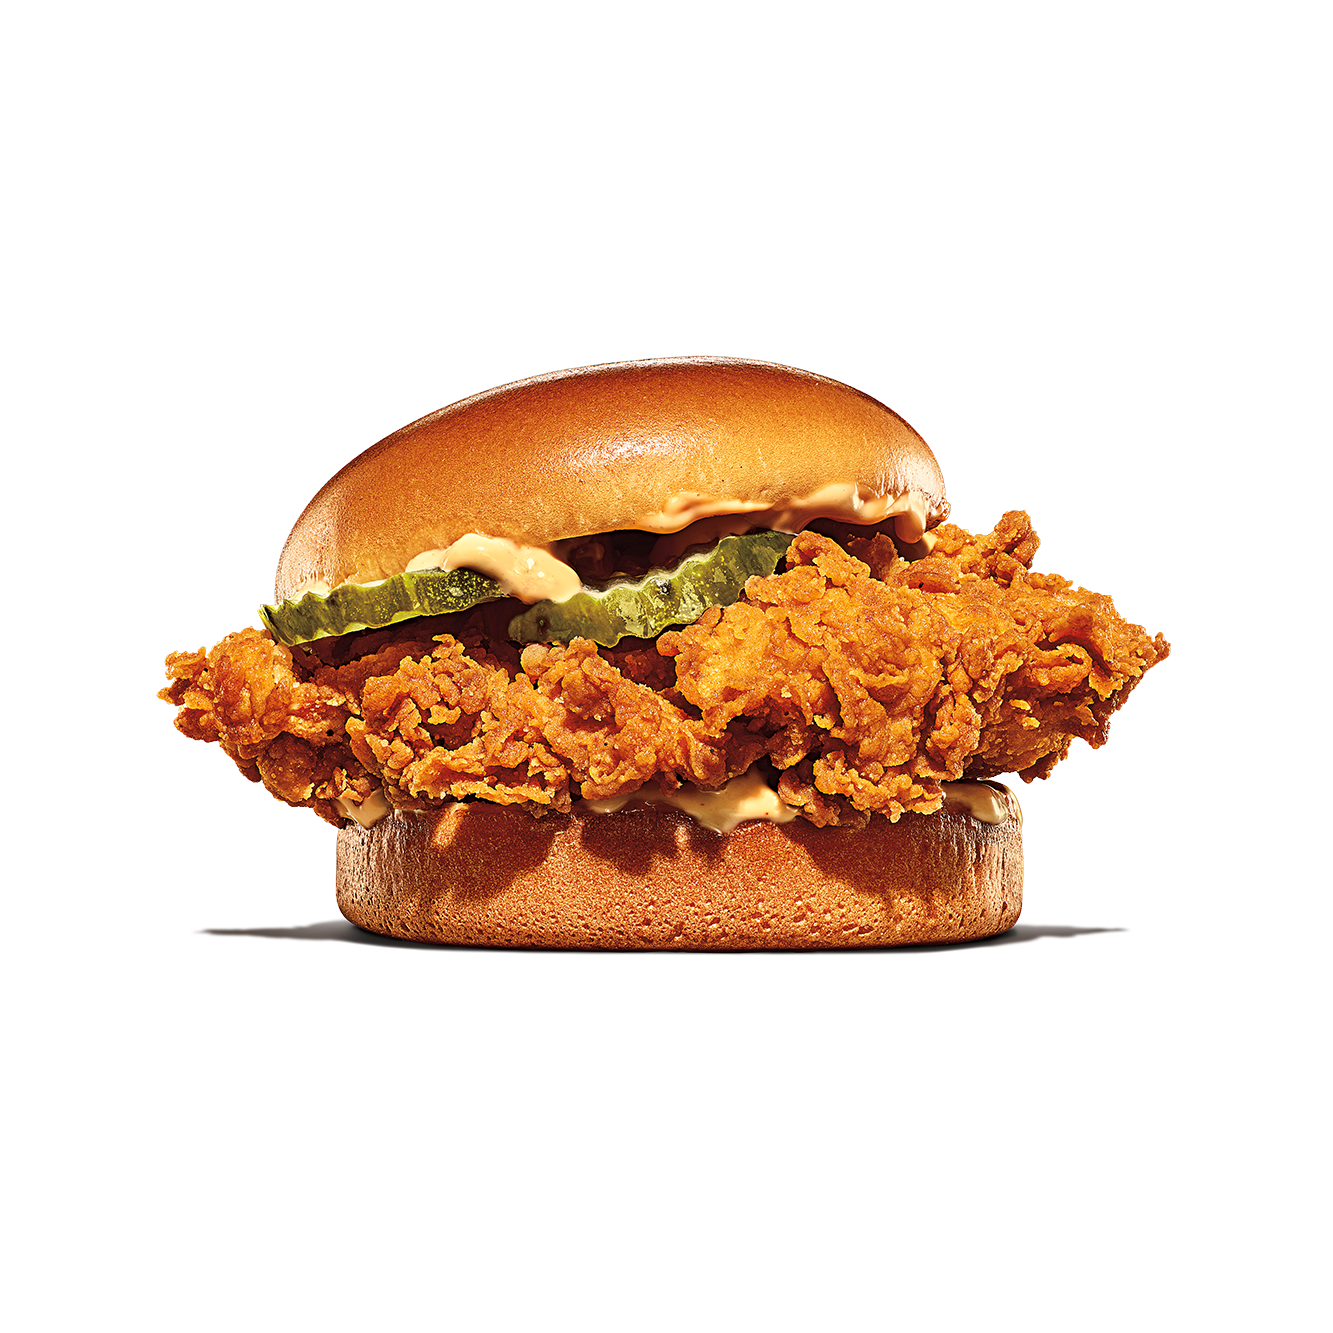 Burger King Hand-Breaded Crispy Chicken Sandwich Nutrition Facts